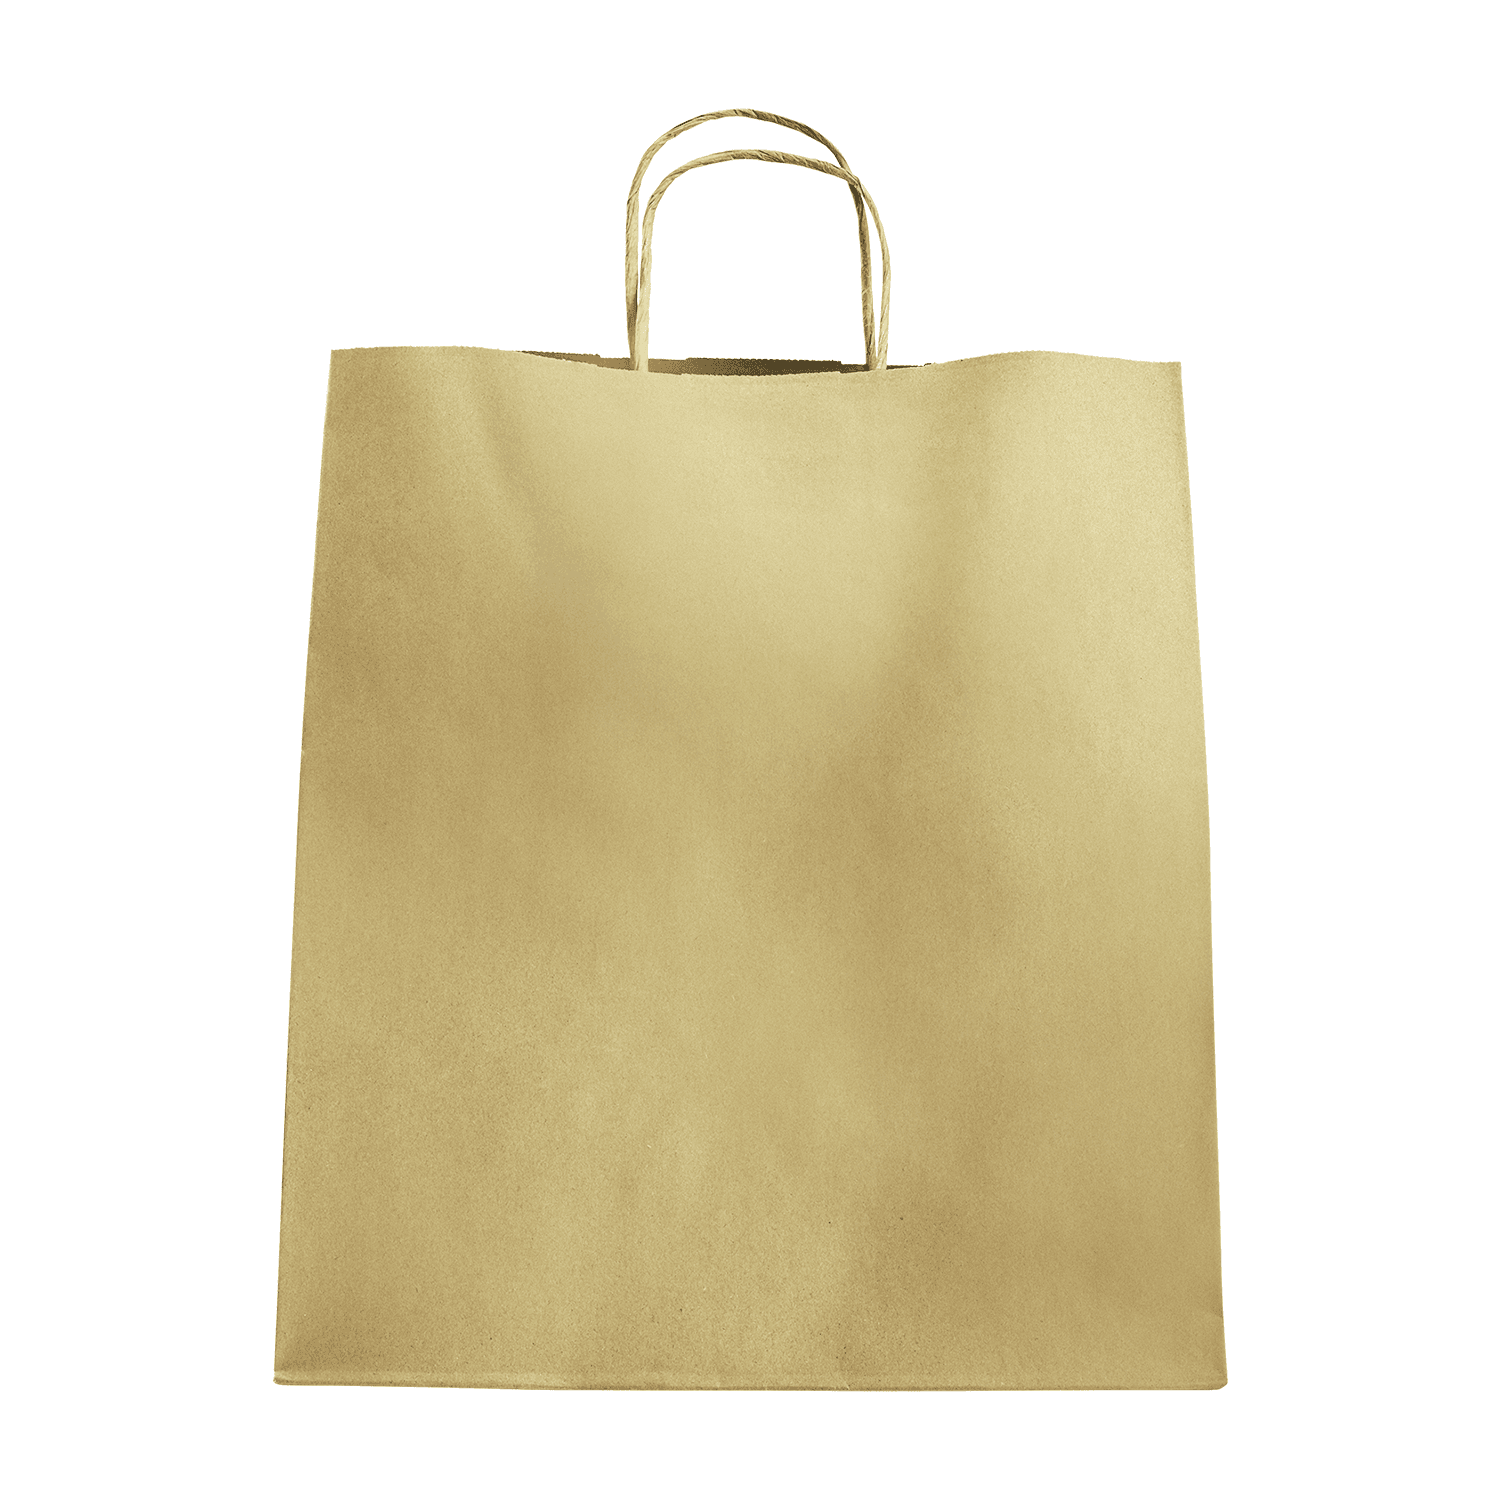 Karat Huntington Paper Shopping Bag with Twisted Handles - 200 pcs